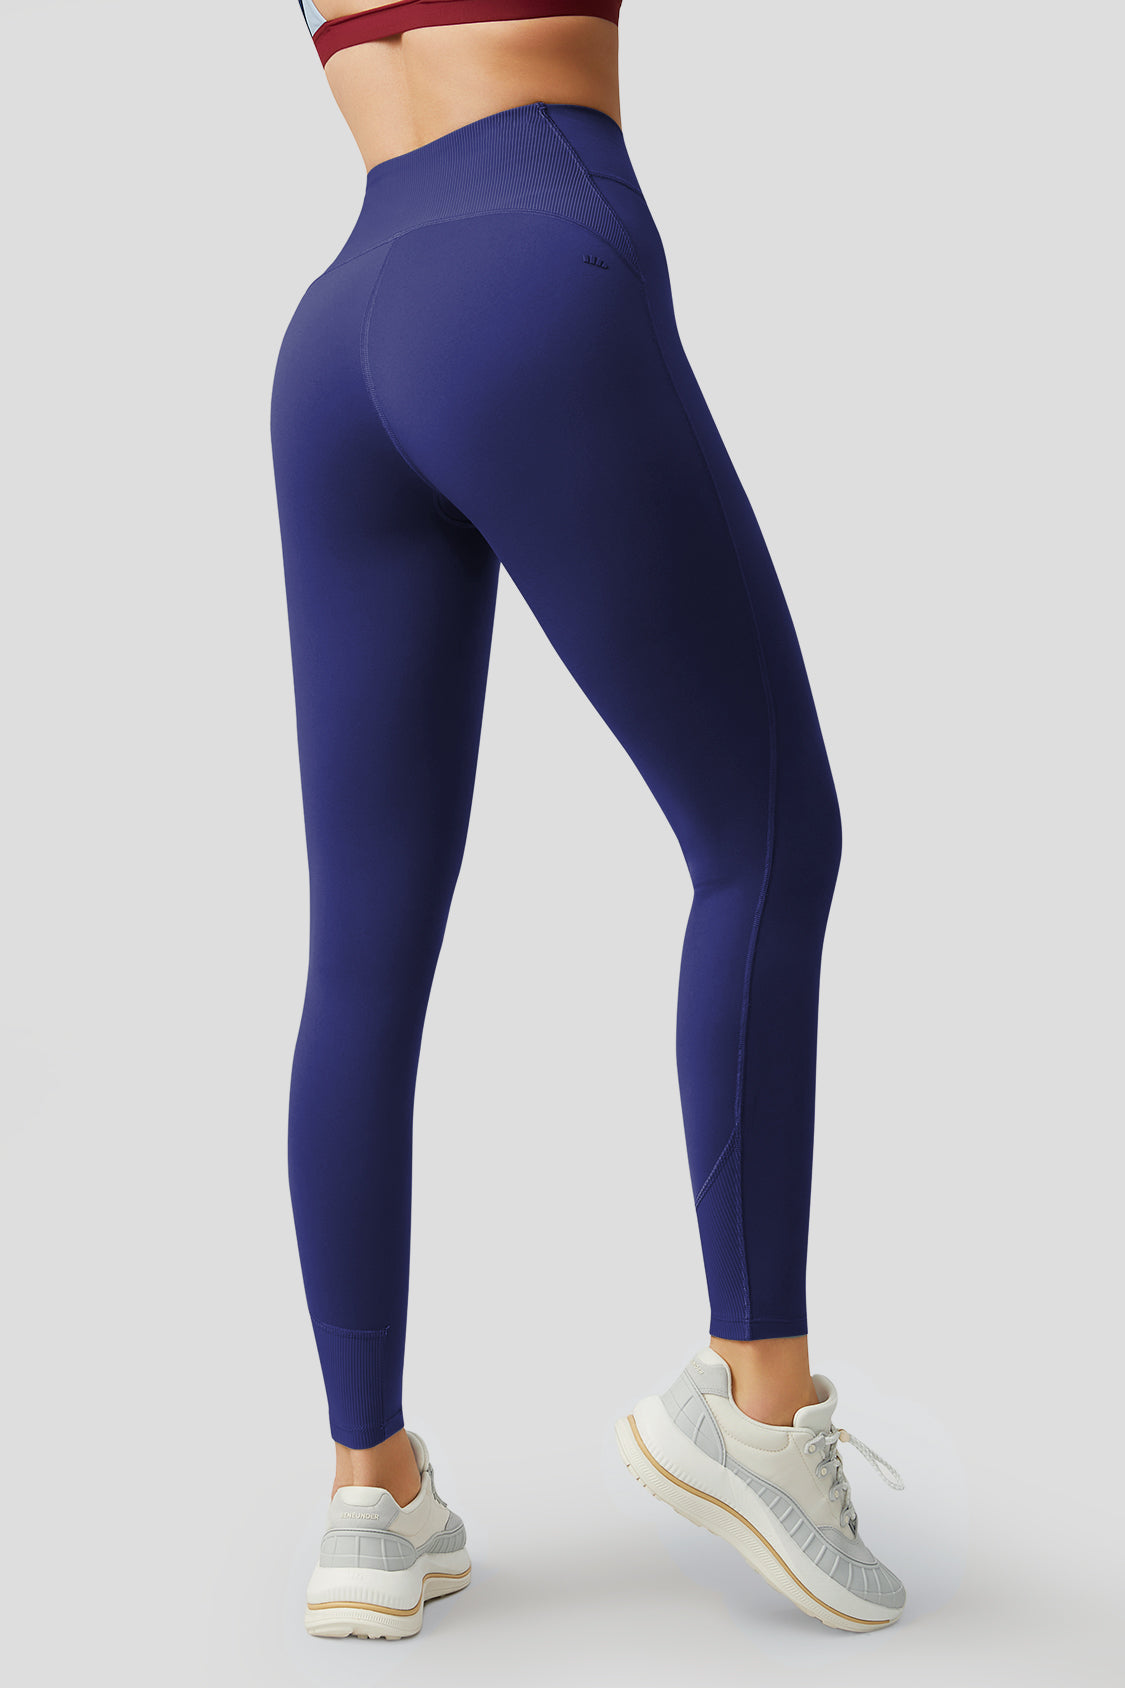 BENEUNDER Leggings for Women - High Waisted Buttery Soft Workout Athletic  Yoga Pants (Carbon Black 6) dealsaving